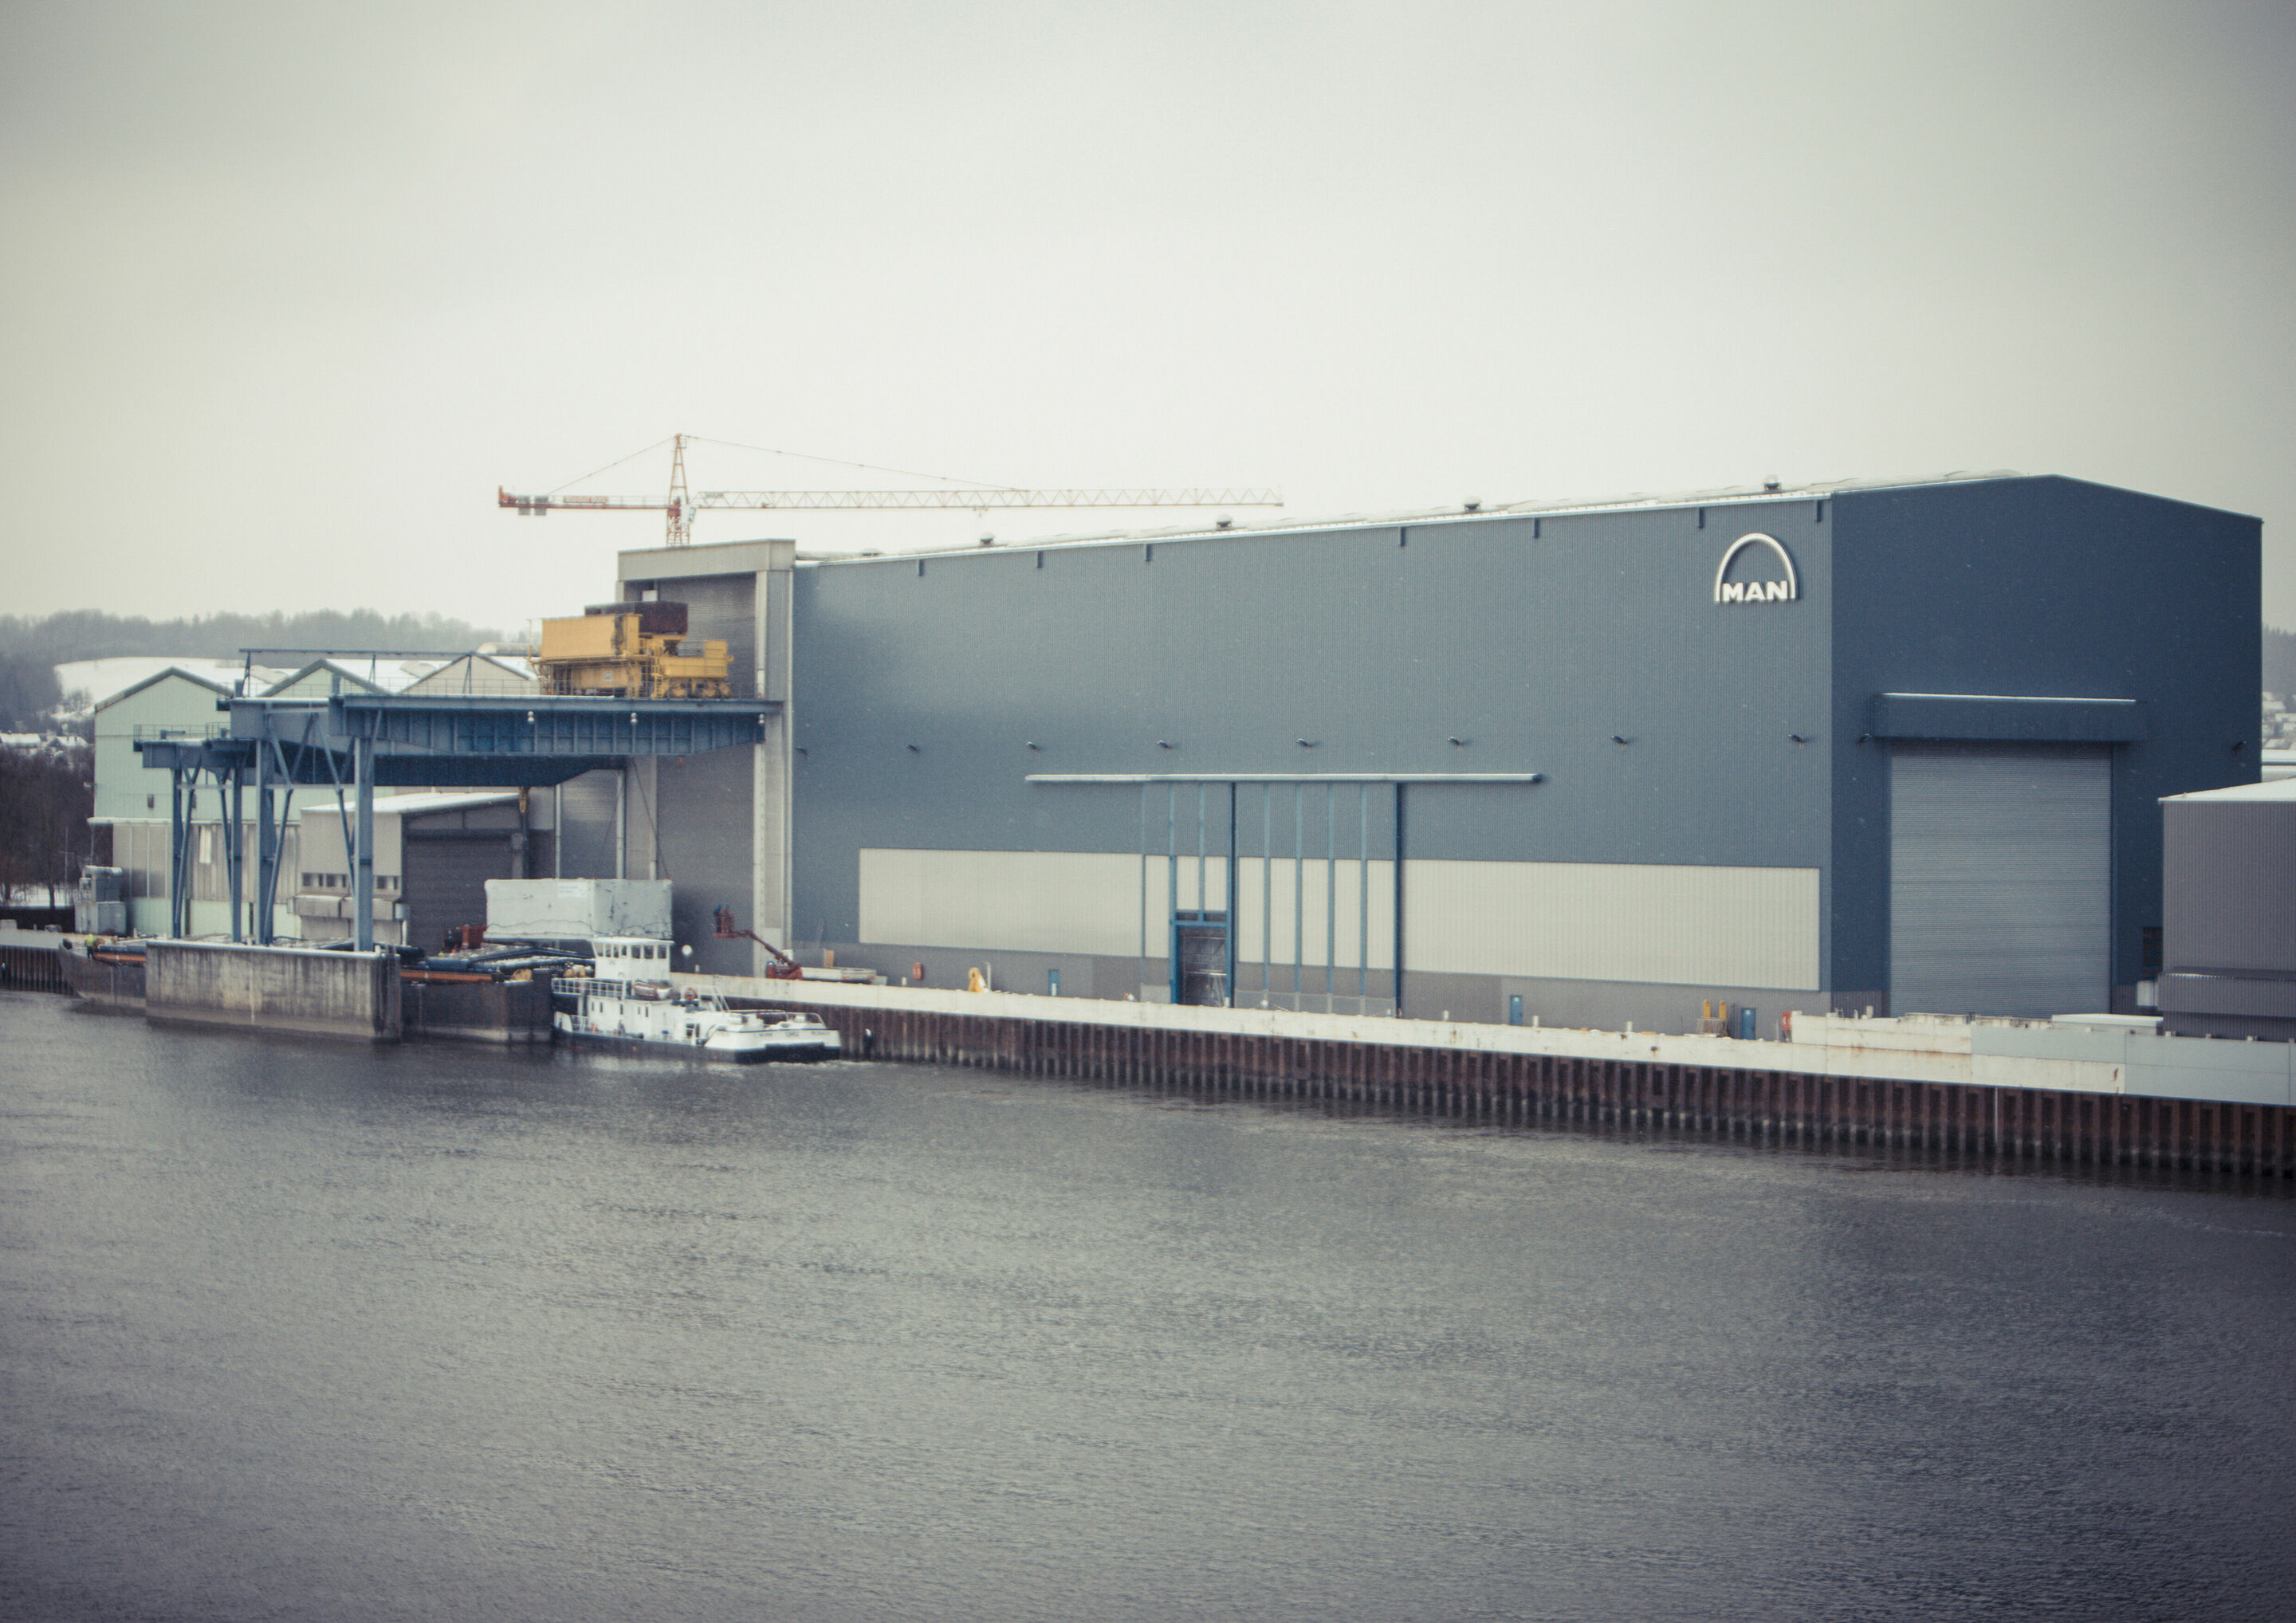 Schwerlasttransport Audi e-gas project